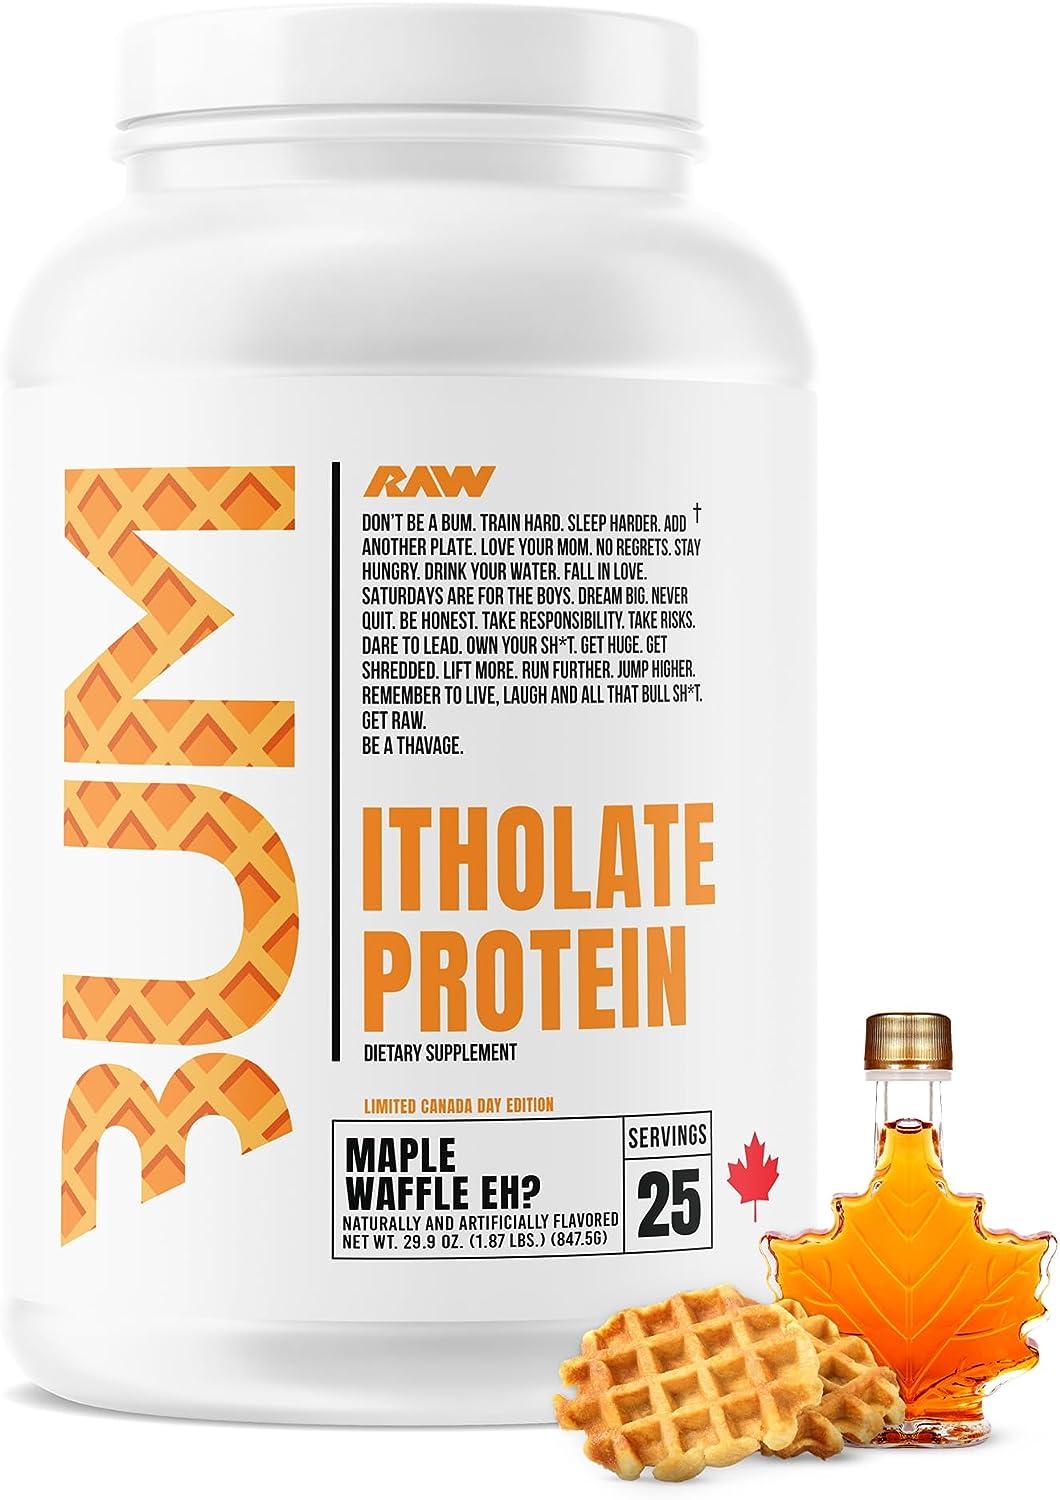 RAW X CBUM Itholate Protein